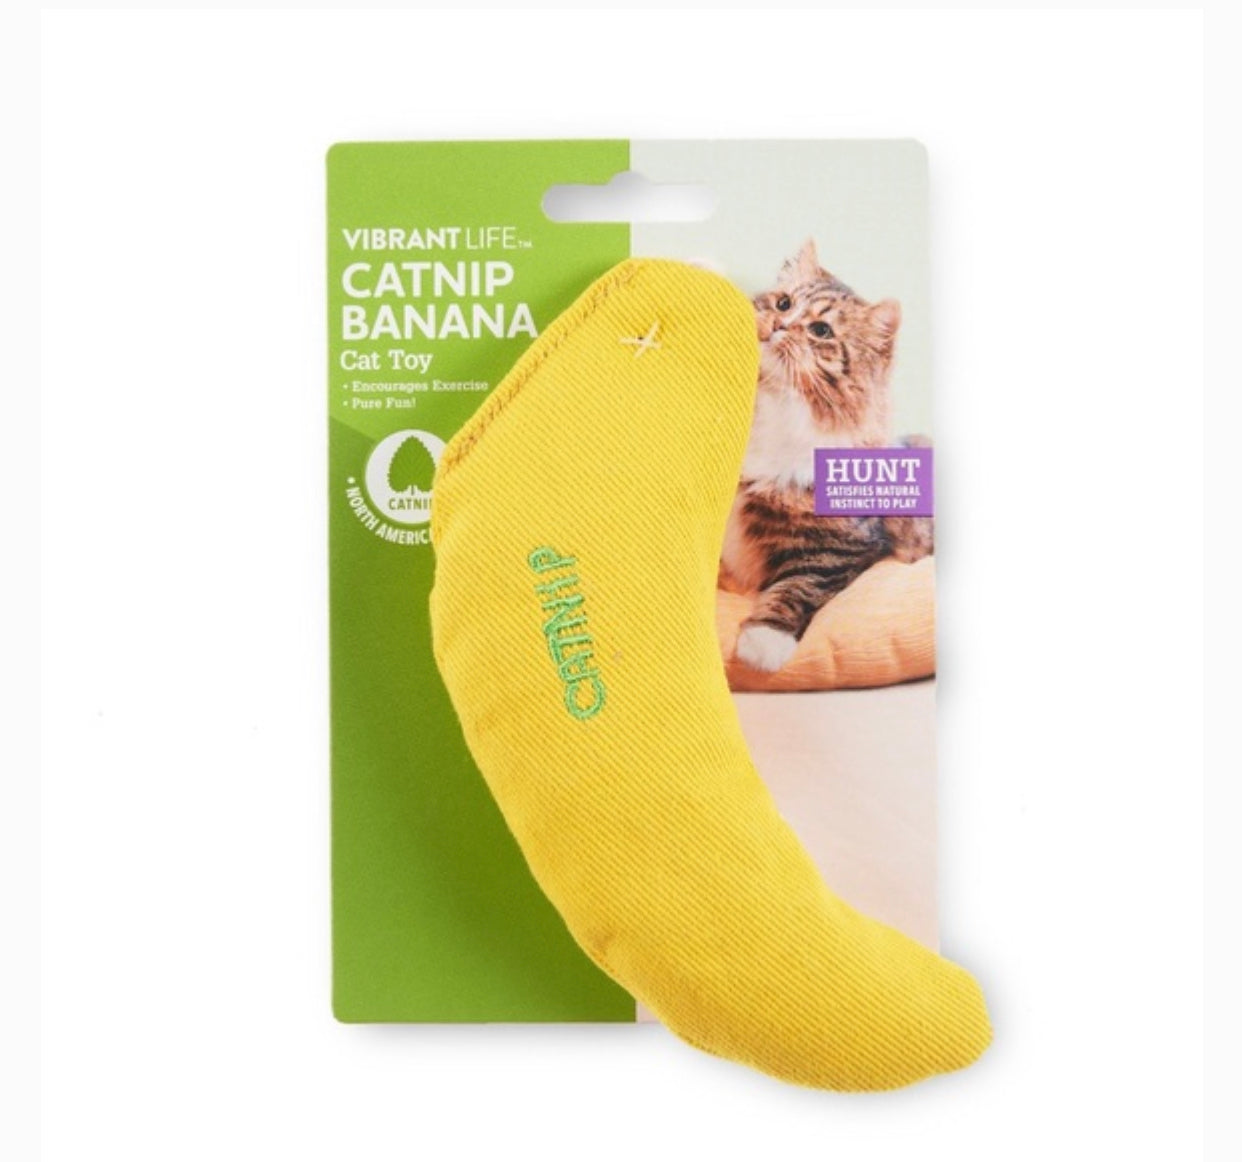 Go Bananas catnip filled toy